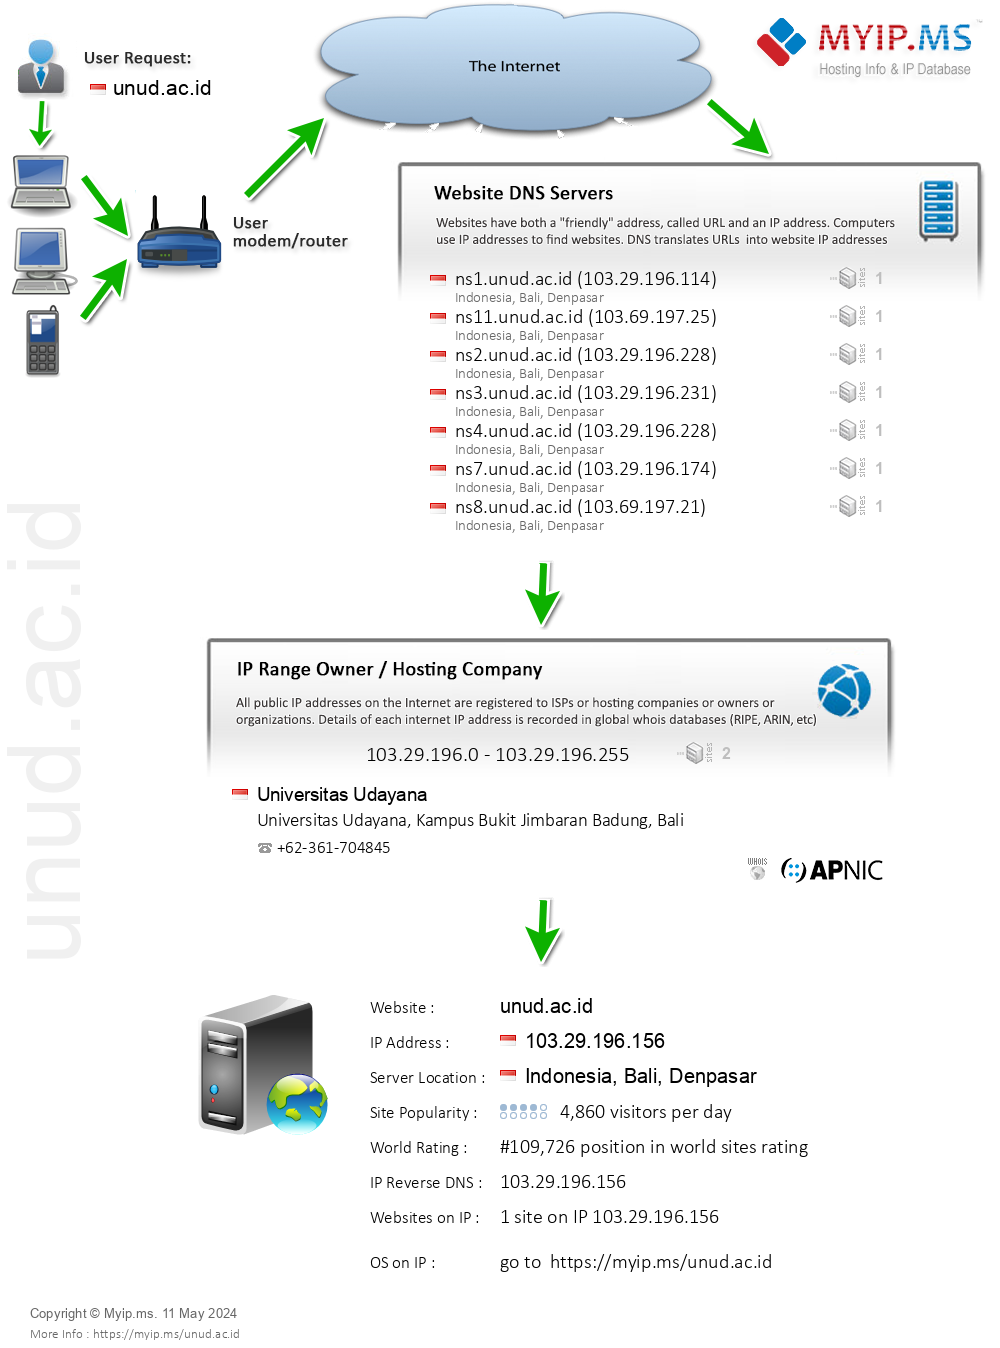 Unud.ac.id - Website Hosting Visual IP Diagram